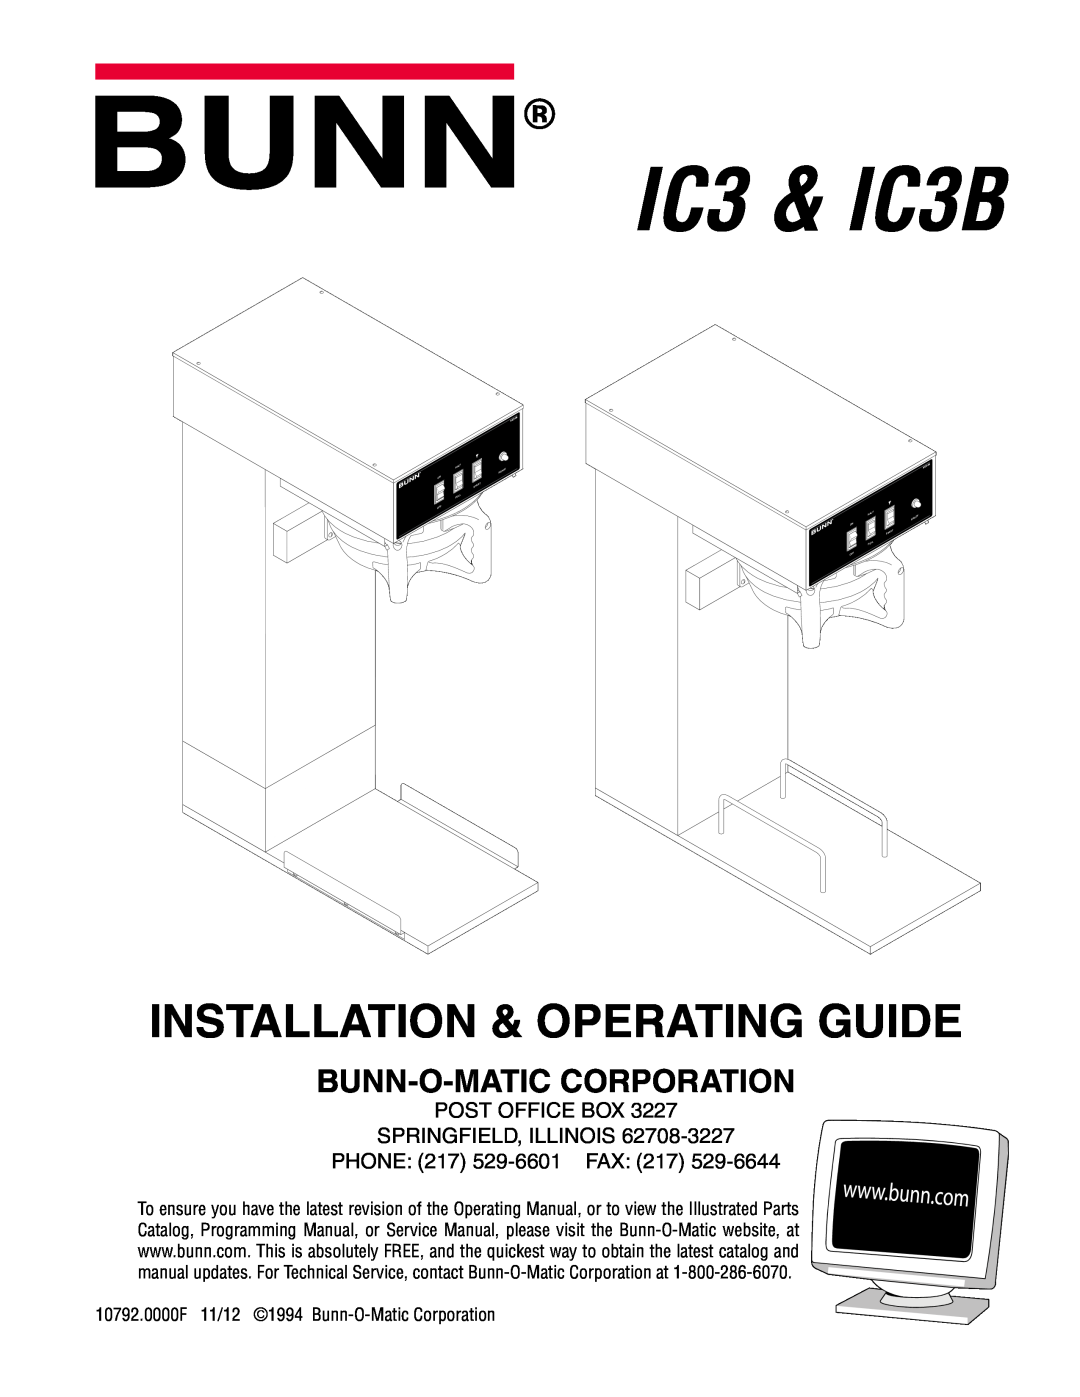 Bunn service manual Bunn-O-Matic Corporation, IC3 & IC3B, Installation & Operating Guide, Full, Read 